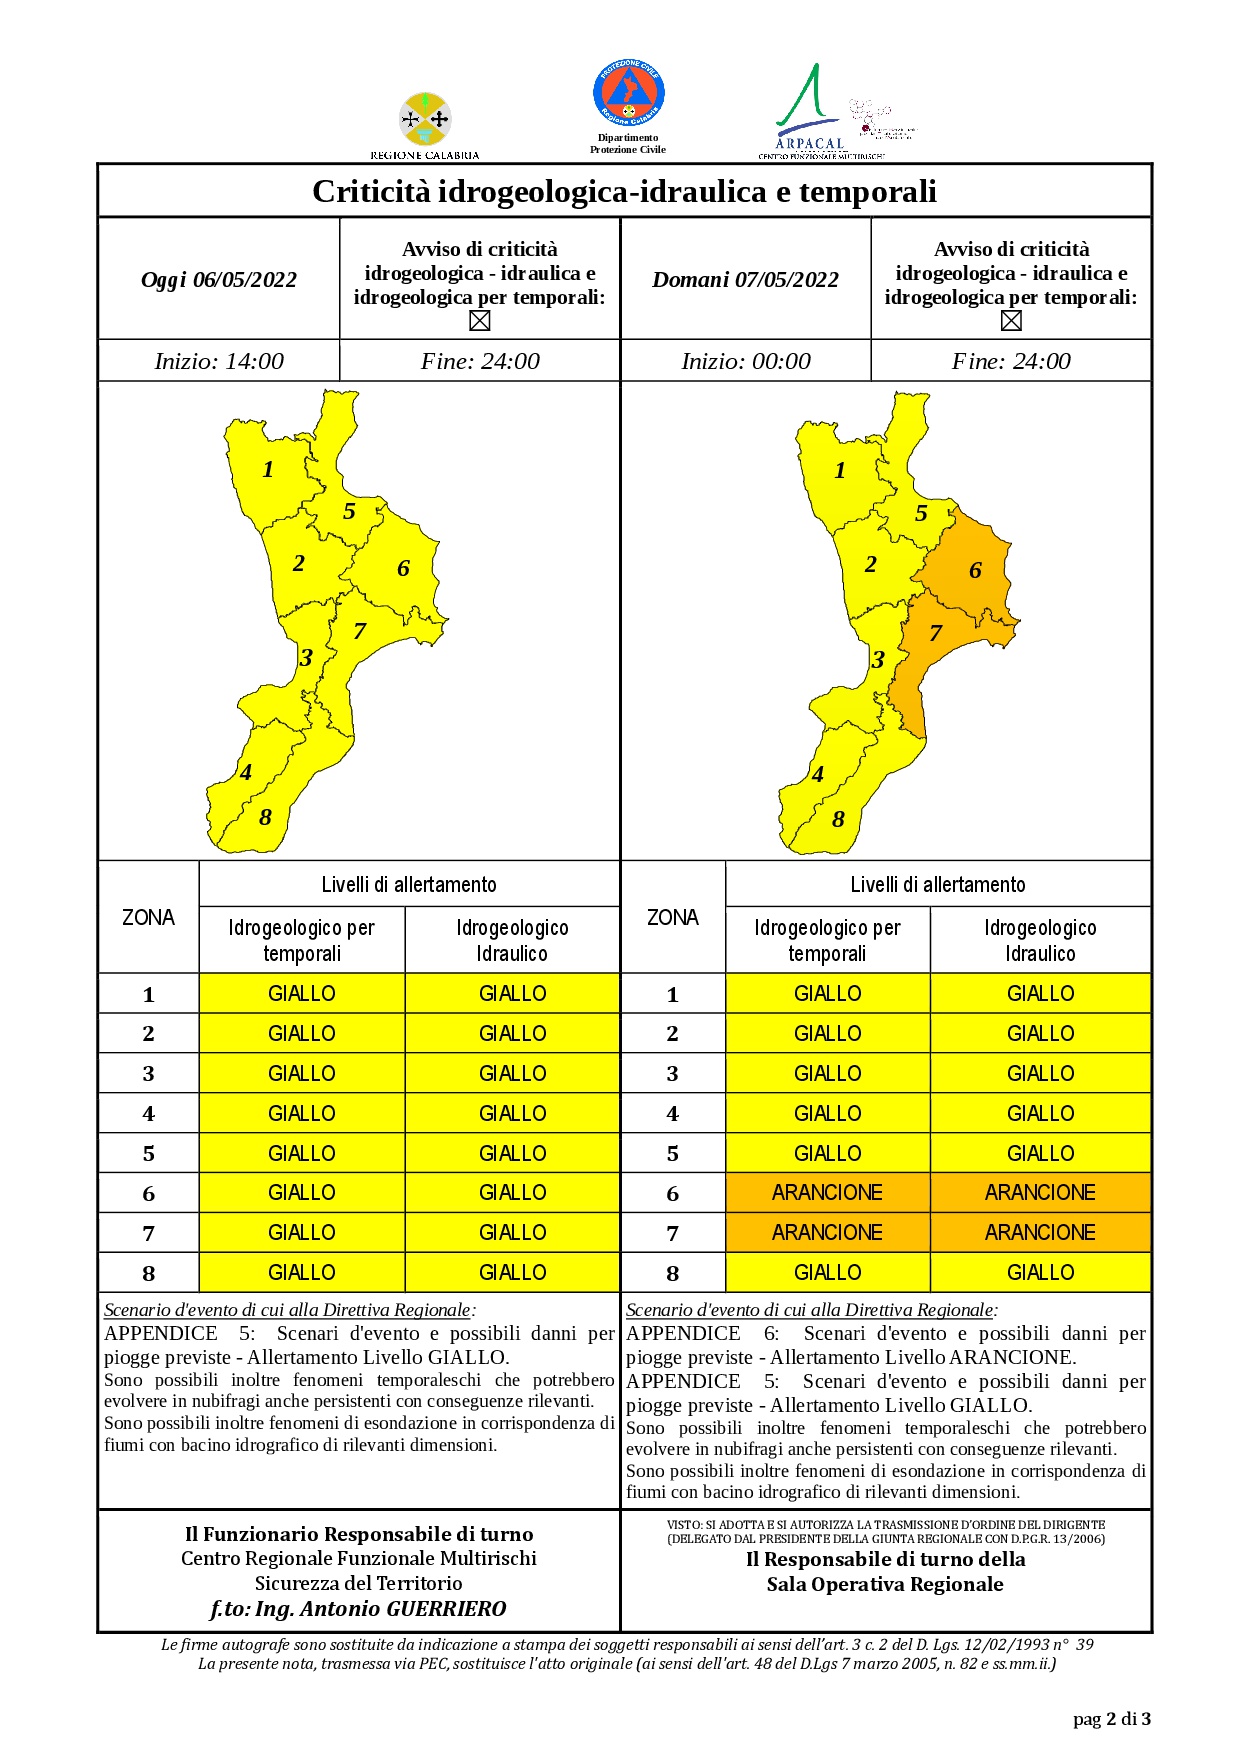 Criticità idrogeologica-idraulica e temporali in Calabria 06-05-2022